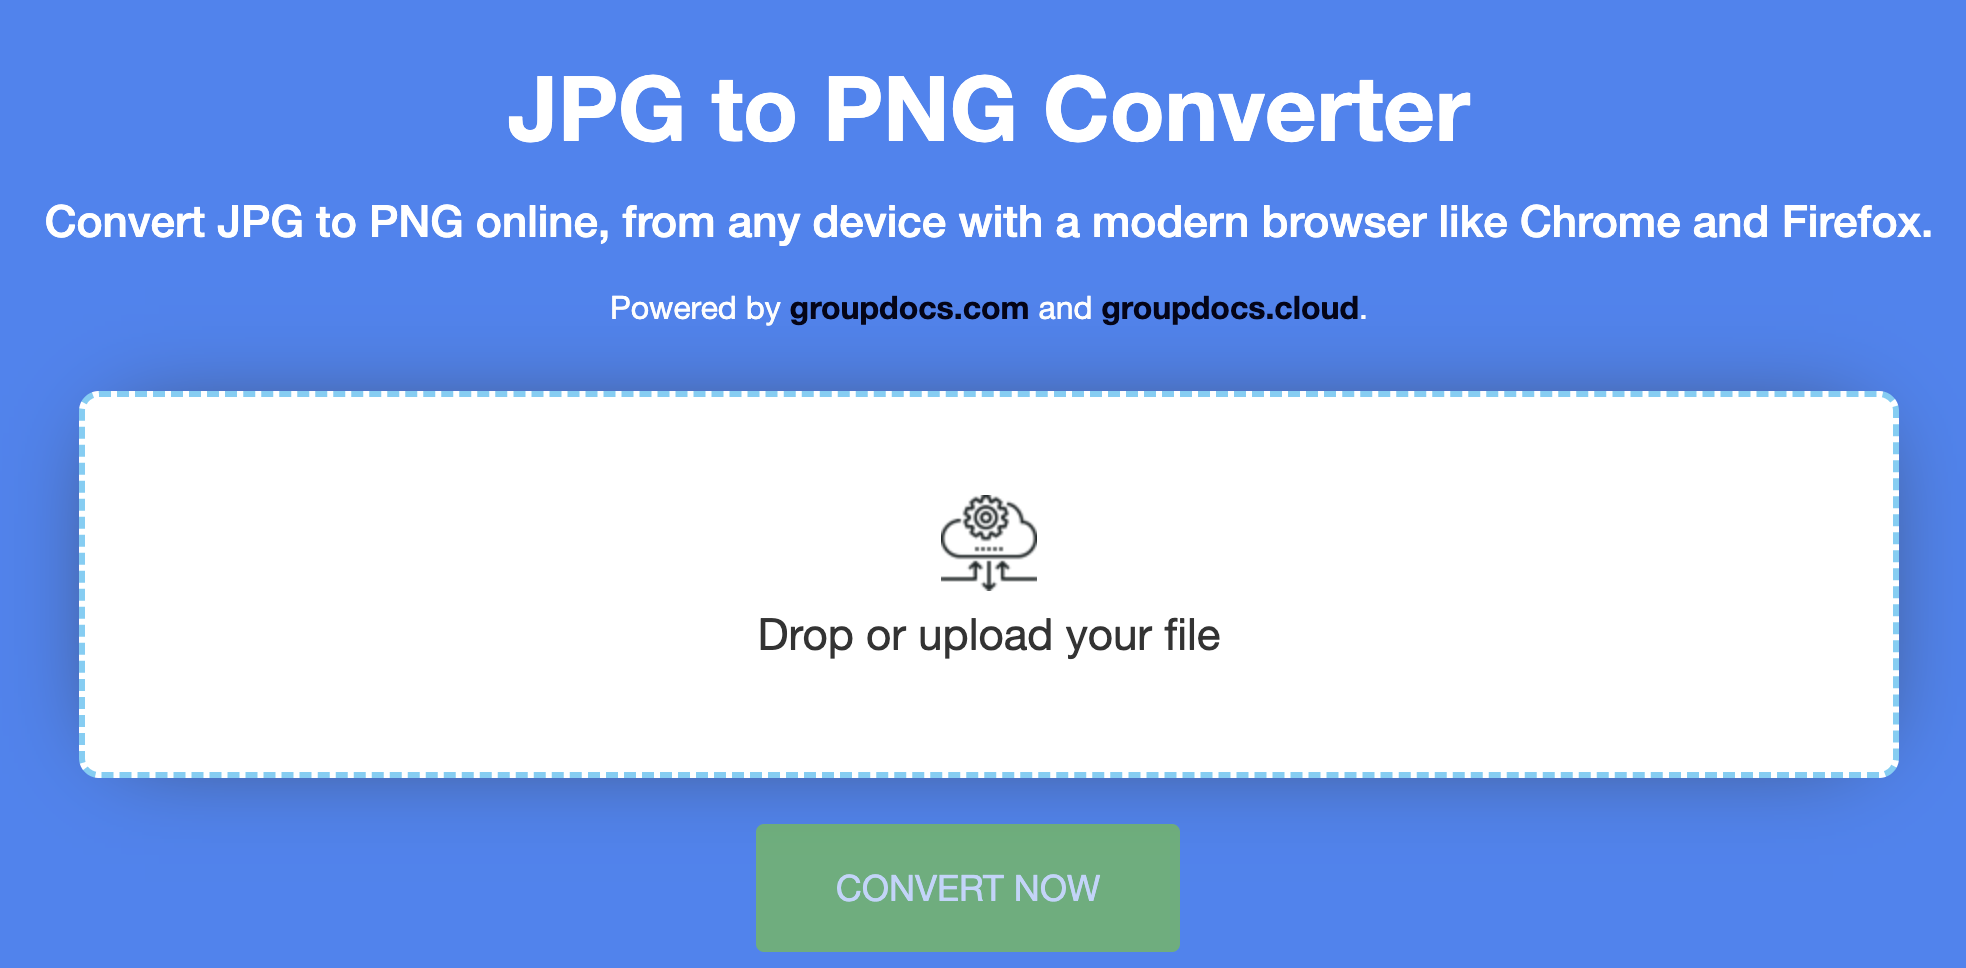 Konvertieren Sie JPG online in PNG